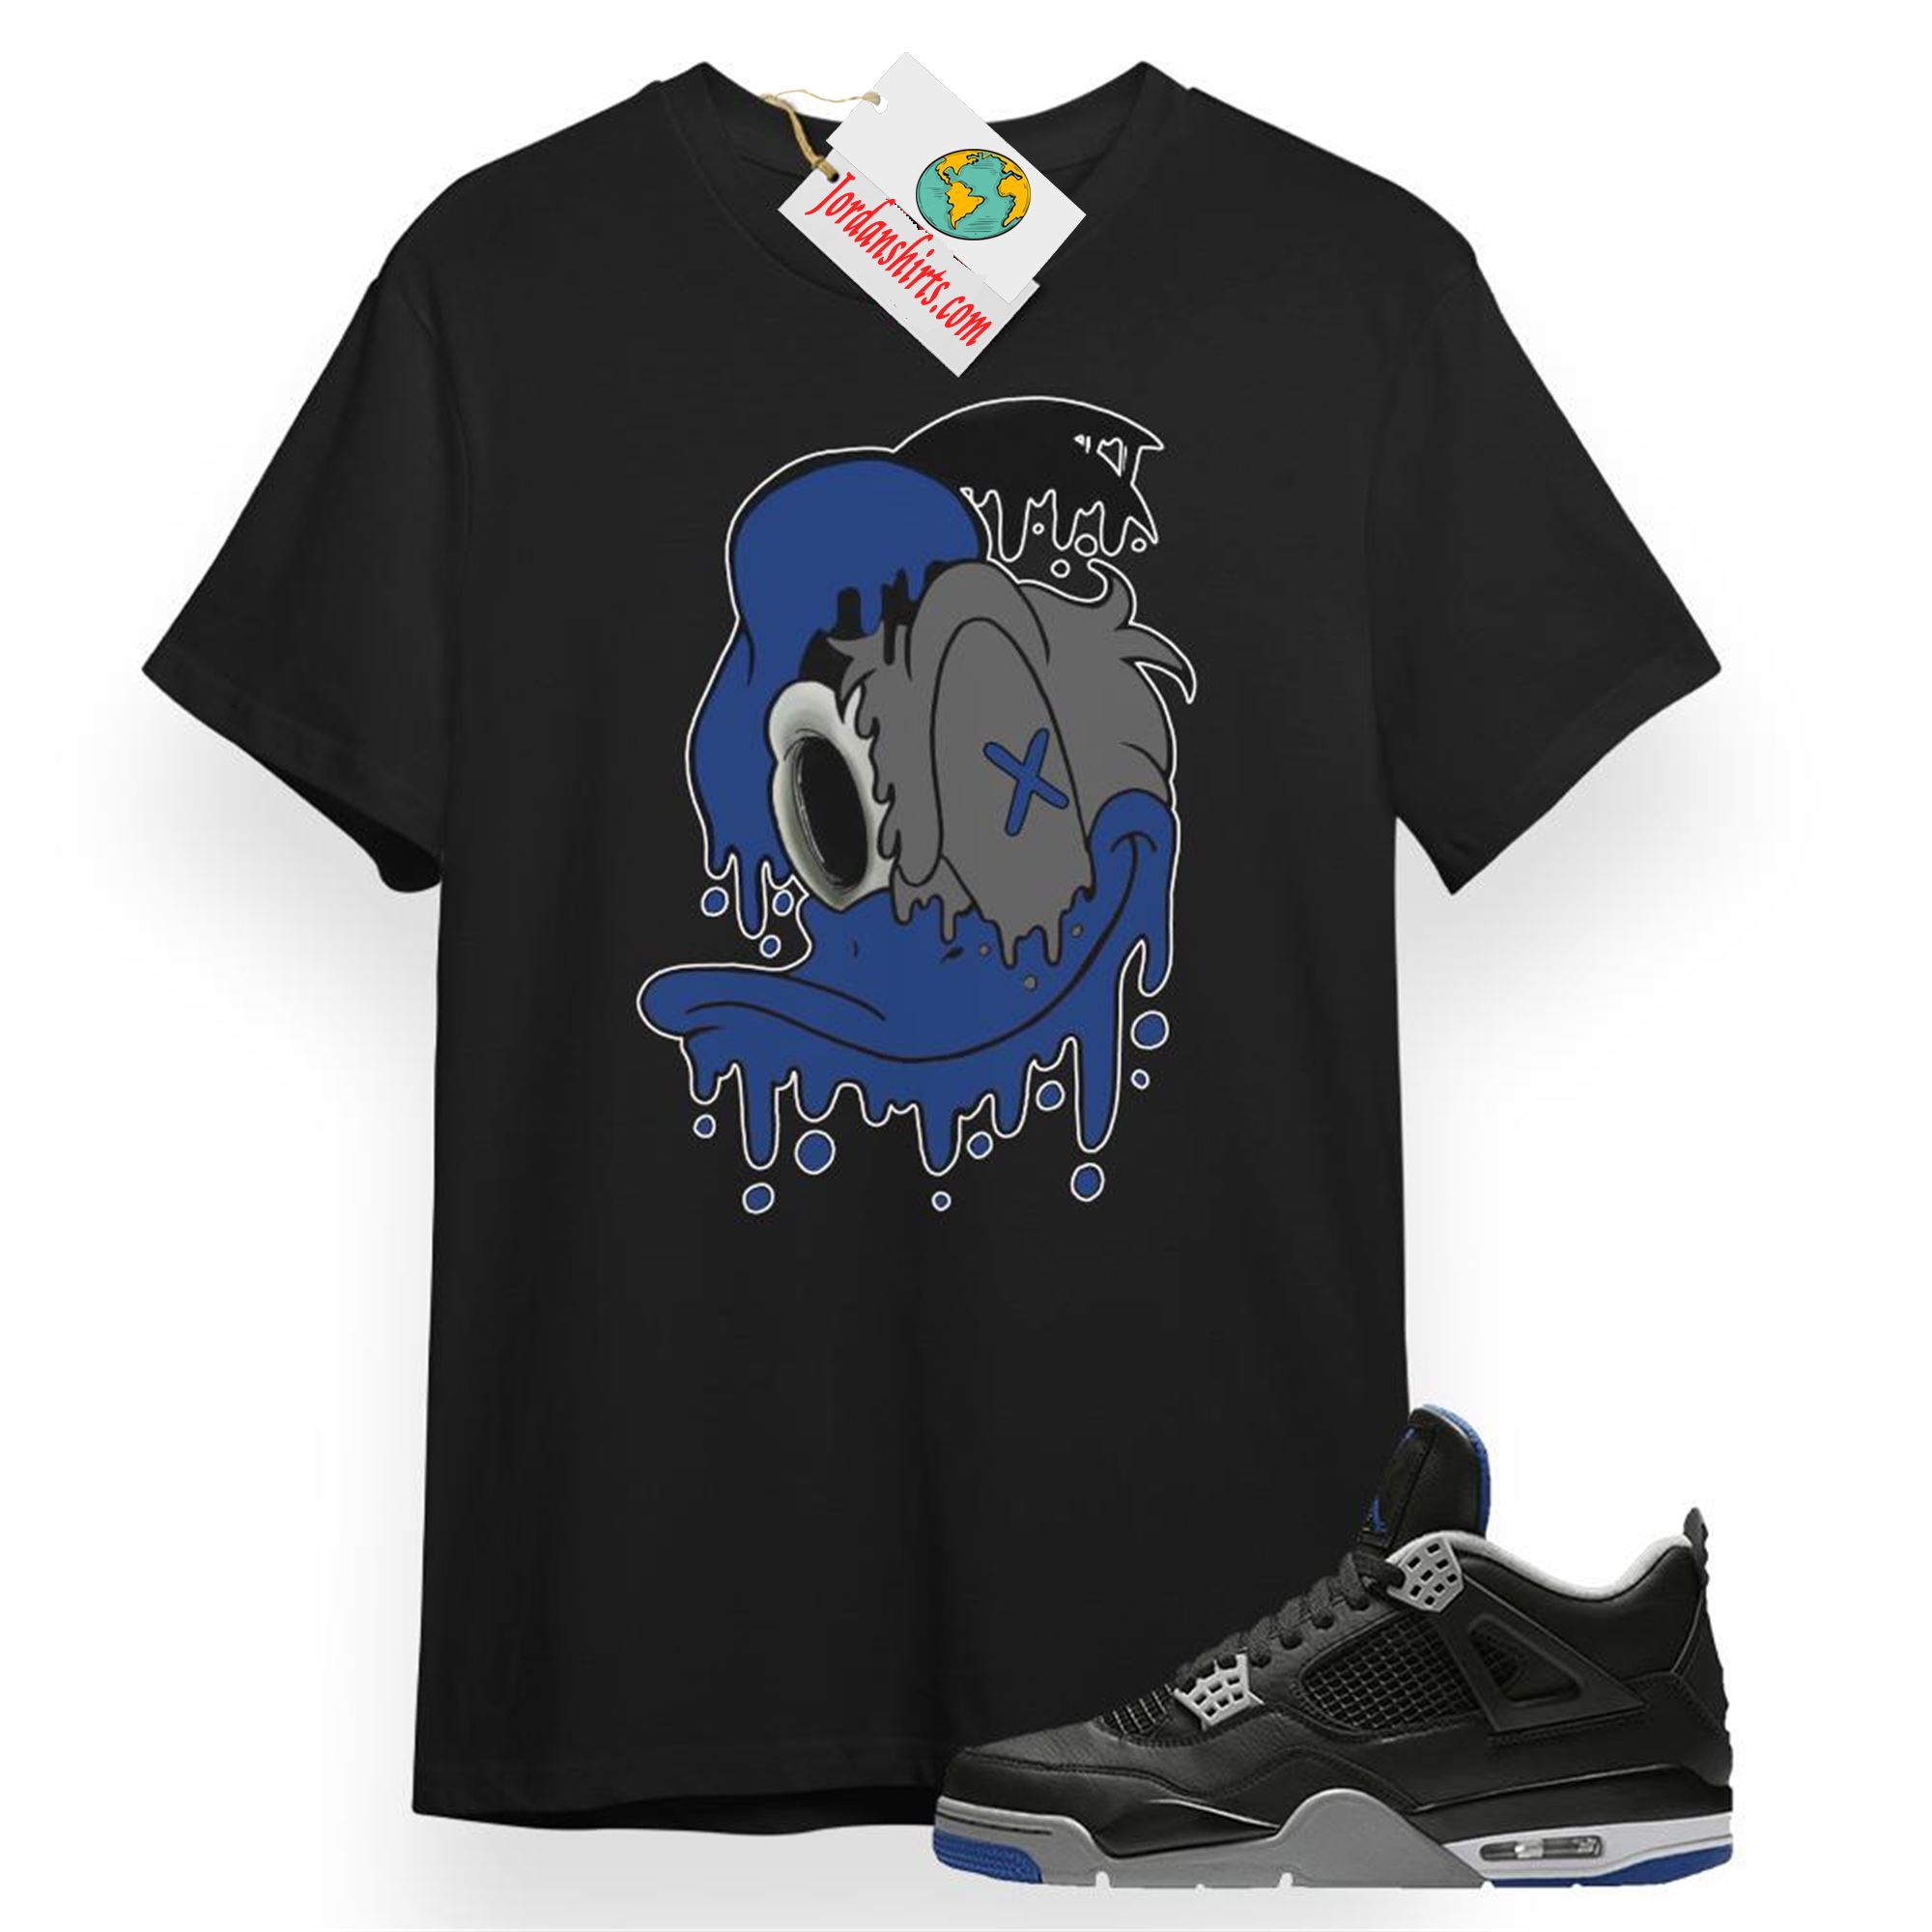 Jordan 4 Shirt, Donald Dripping Black T-shirt Air Jordan 4 Motorsport Alternate 4s Plus Size Up To 5xl